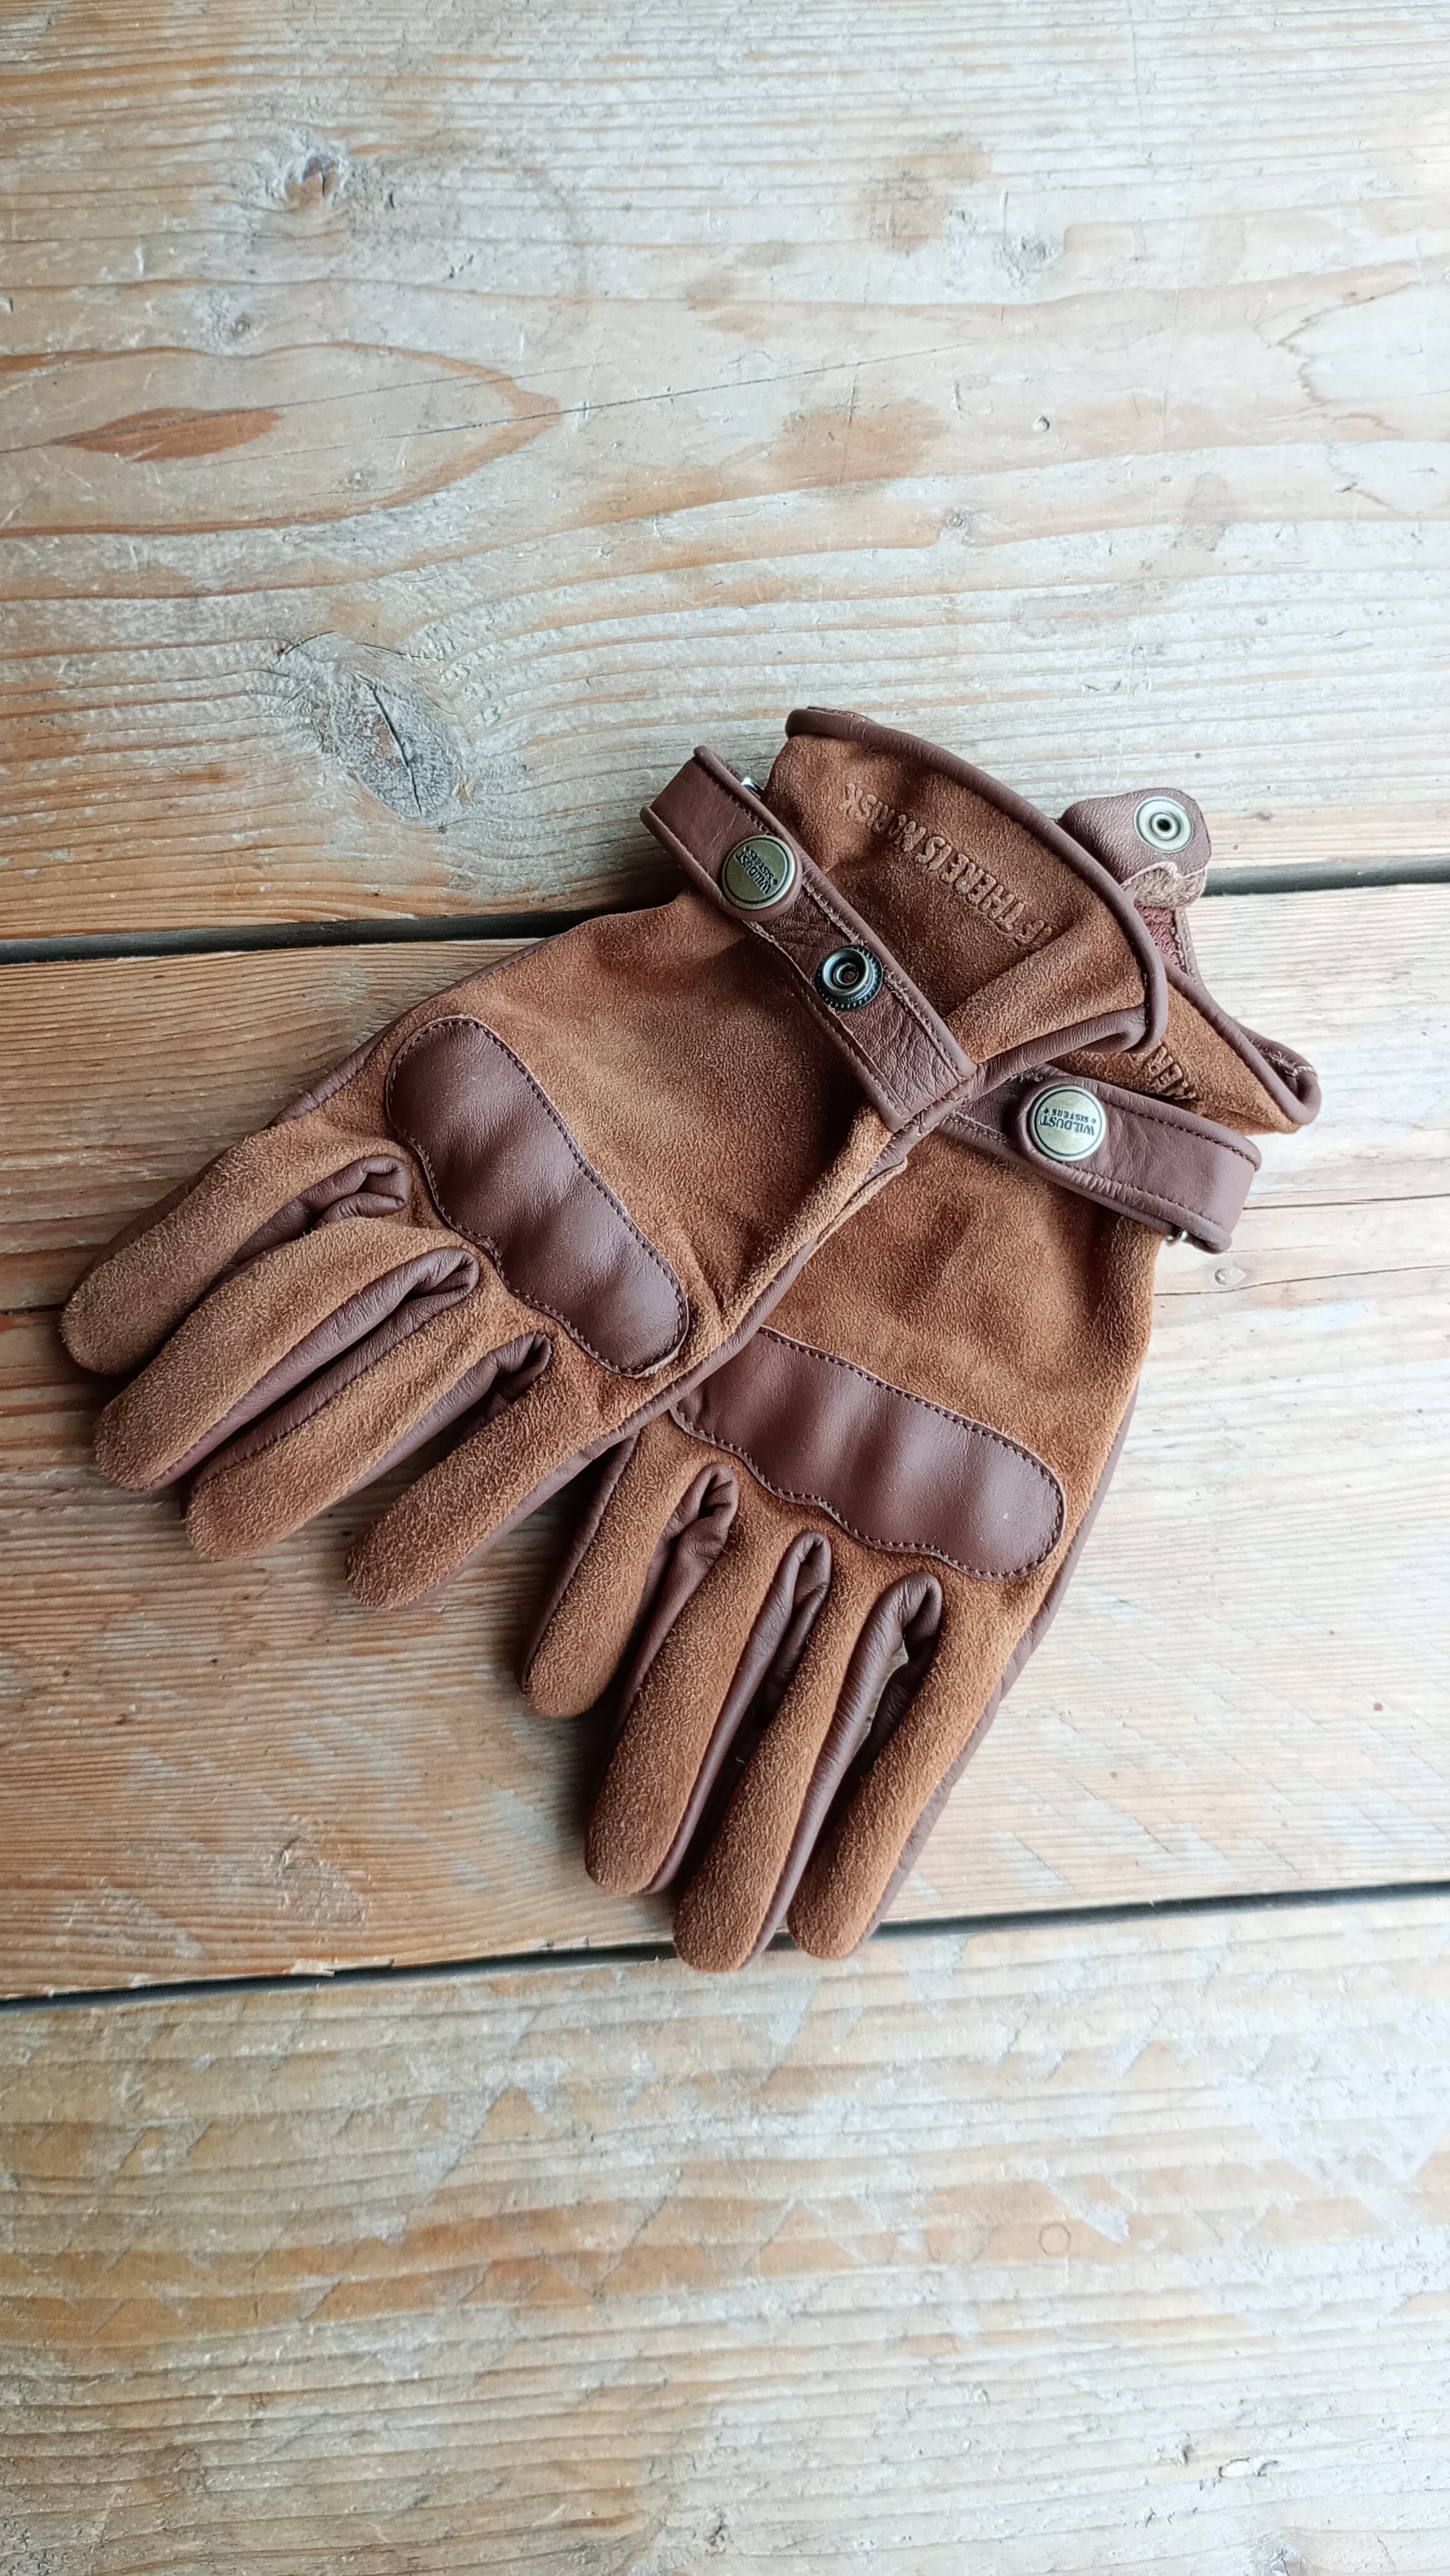 Wildust Sisters Arizona leather gloves BROWN